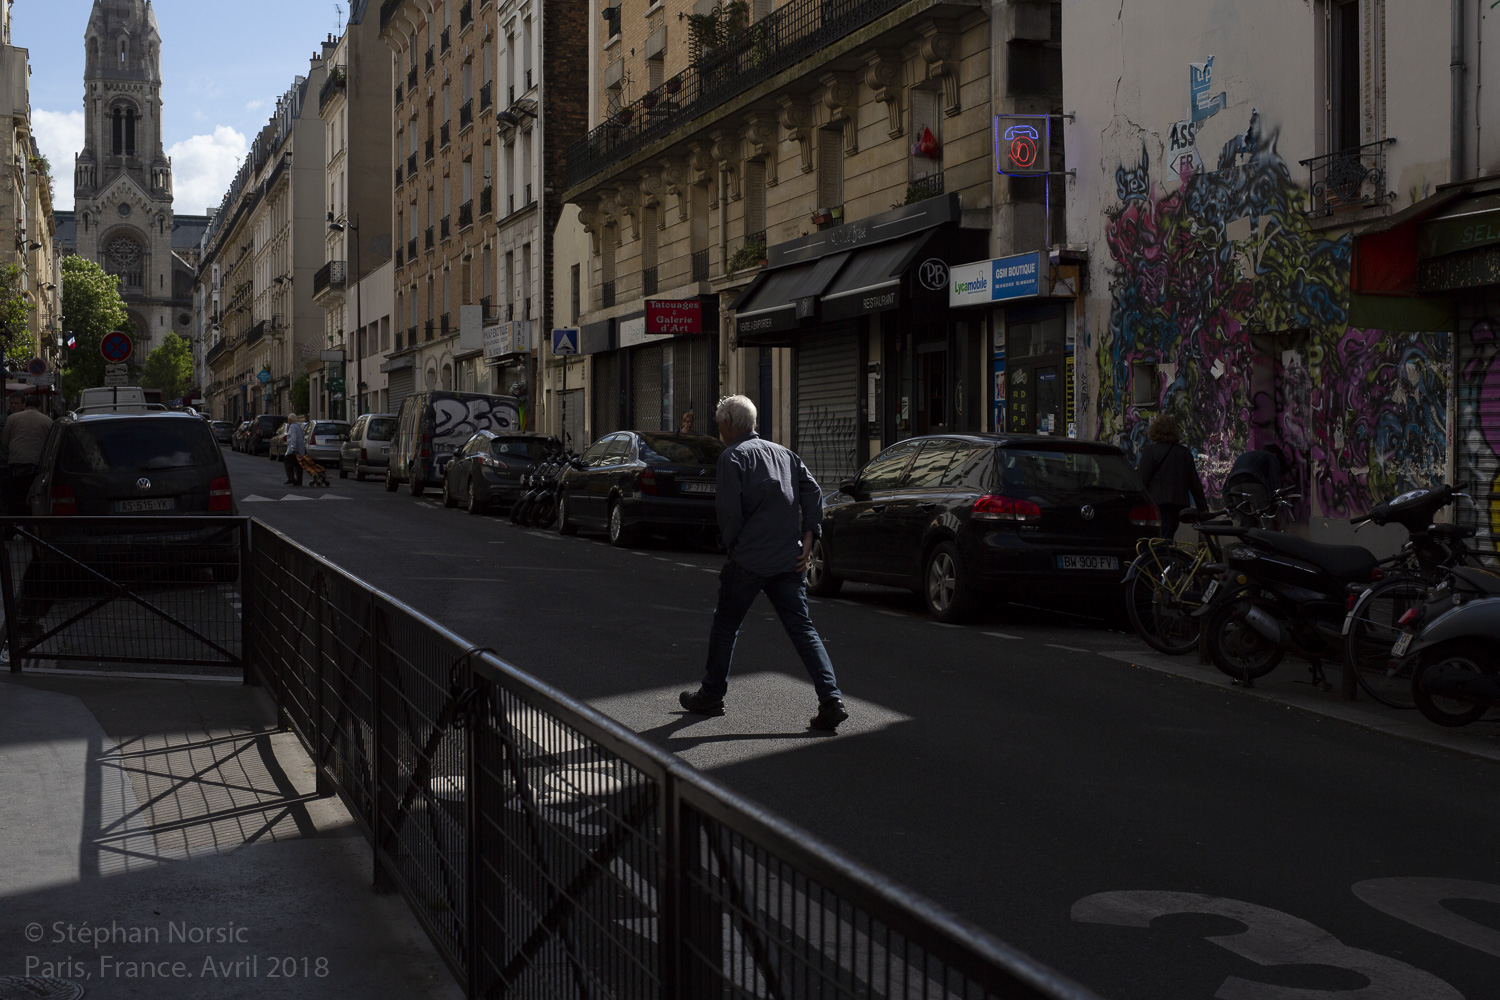 Streetphotography, photo de rue. Paris. France.